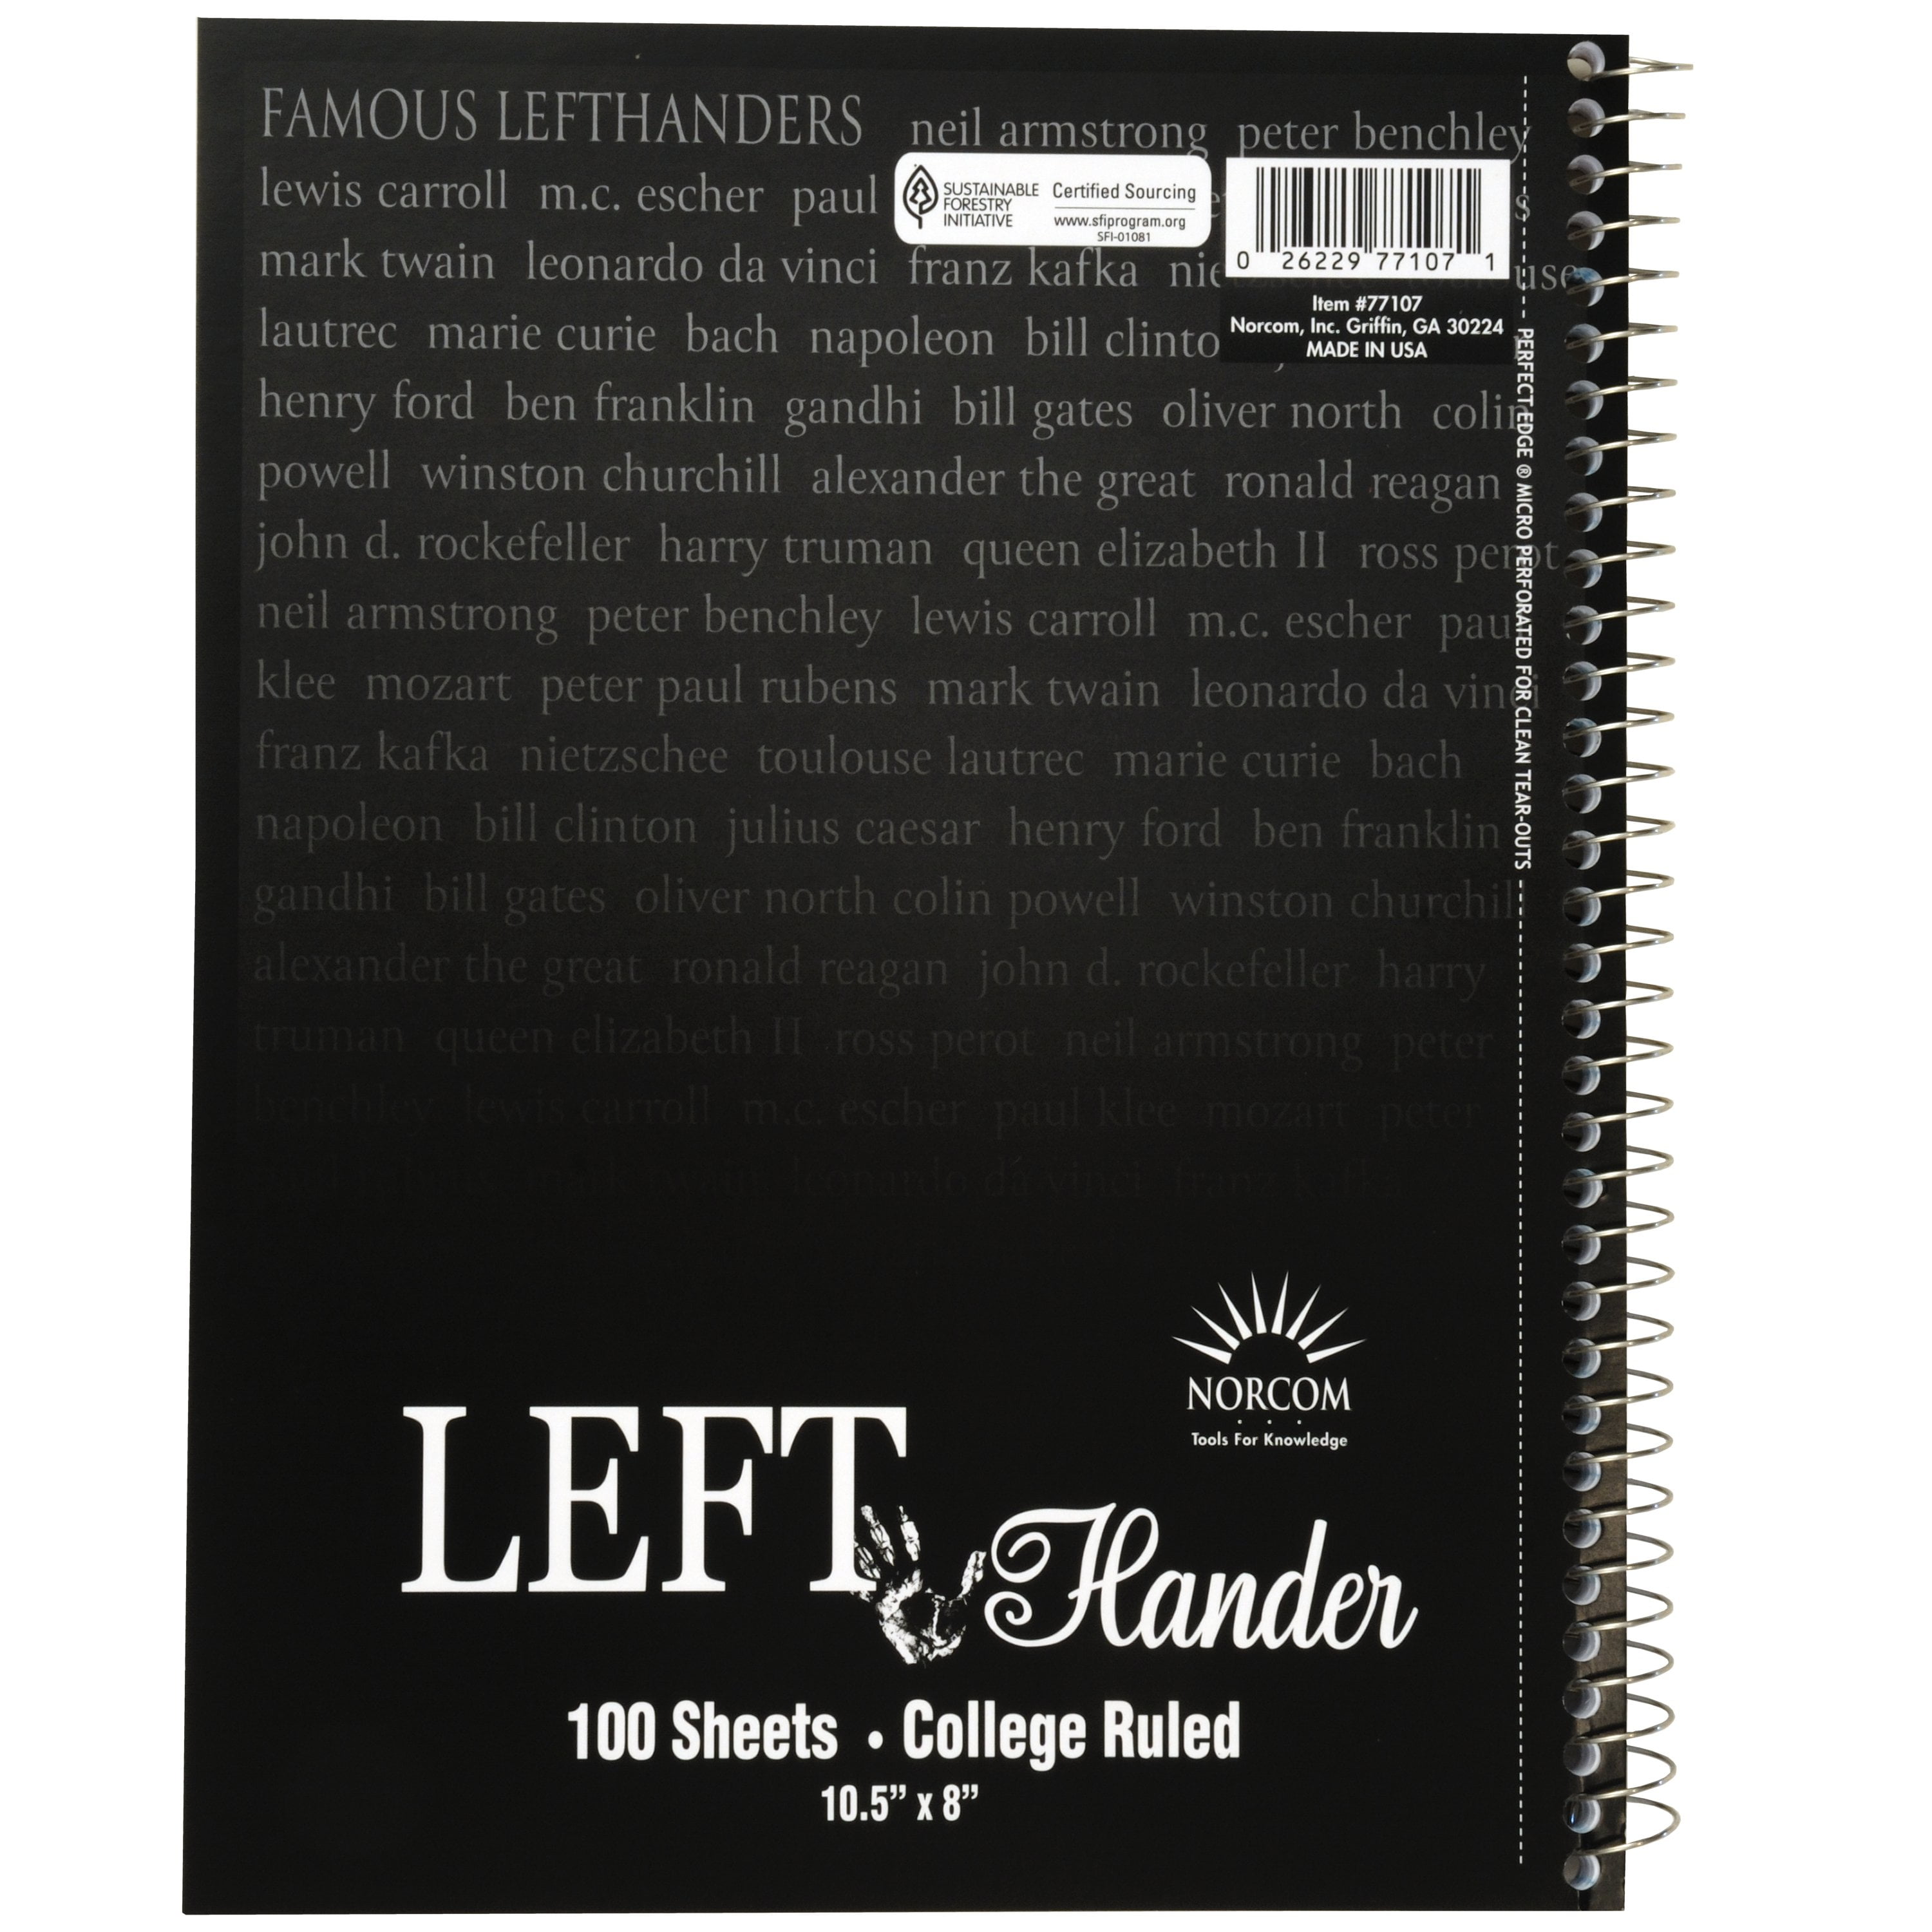 Minimalist Left-Handed Notebook